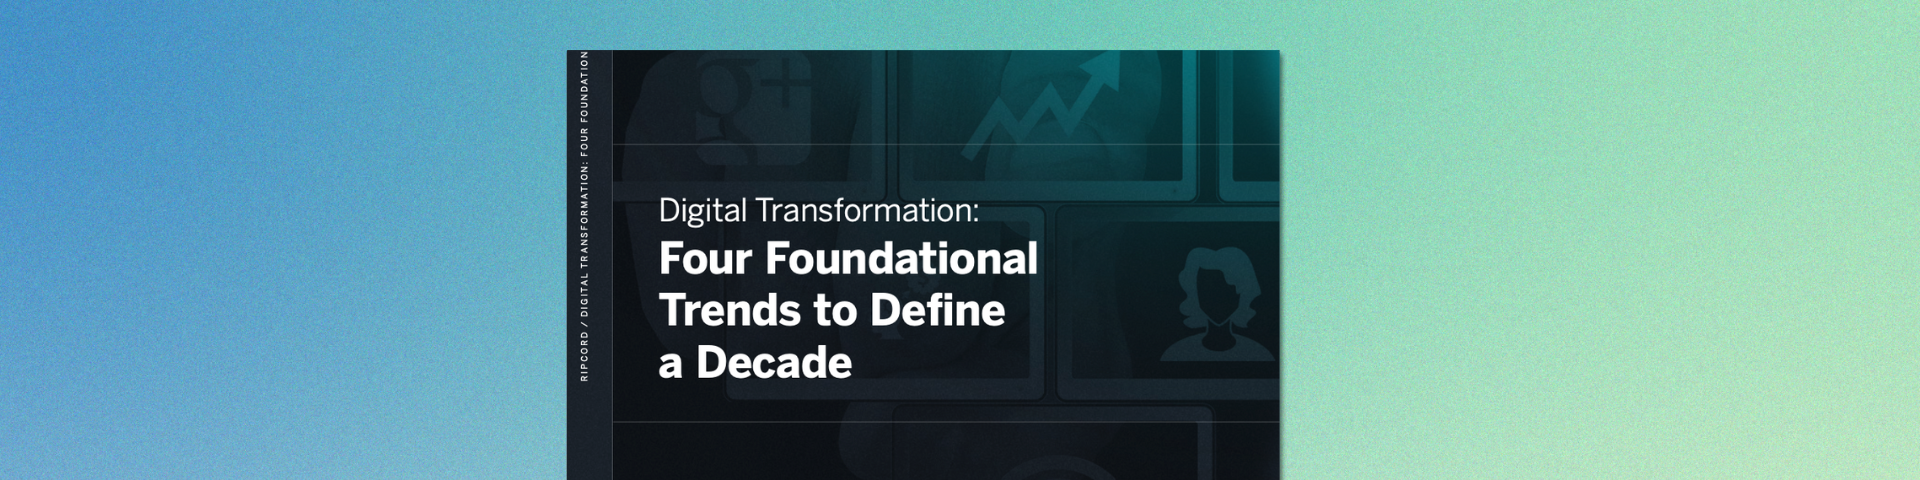 Digital Transformation Four Foundational Trends to Define a Decade eBook - Ripcord